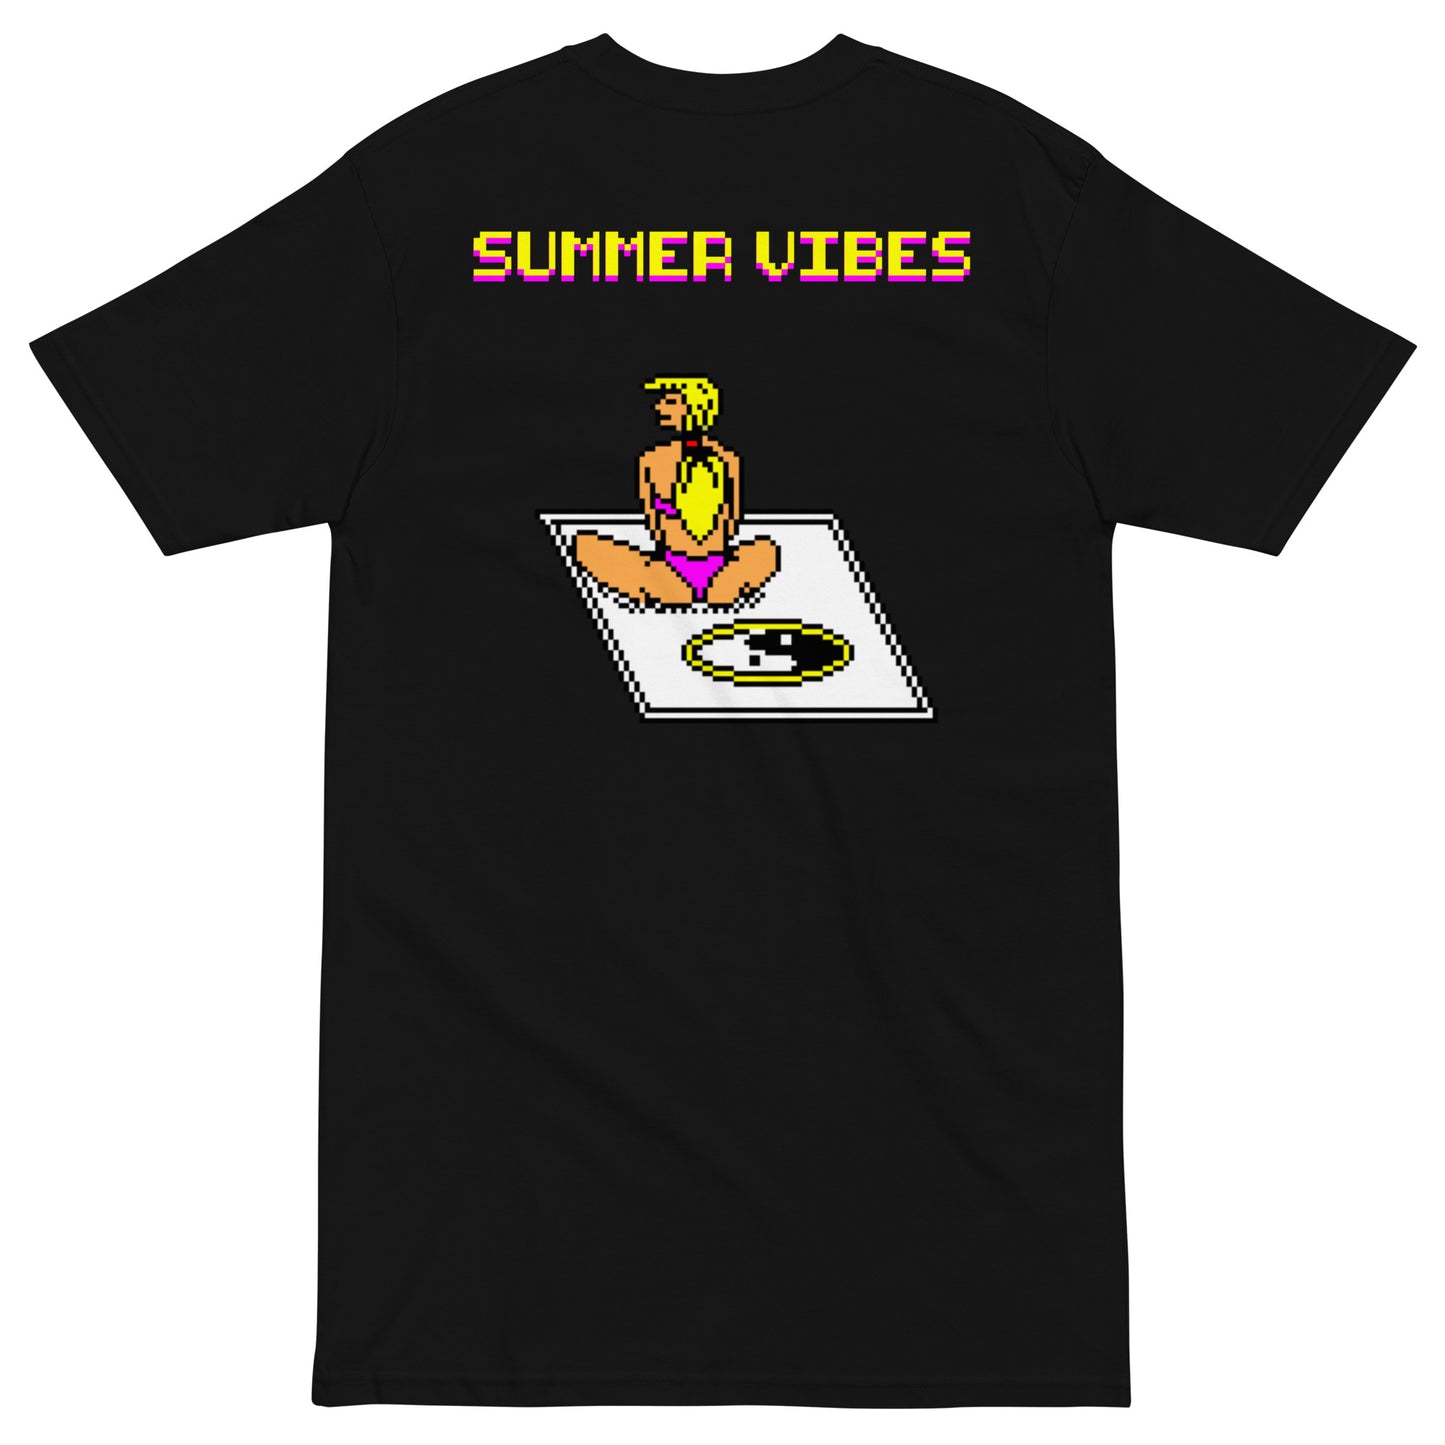 Printed Back Unisex Premium Heavyweight Tee / T-shirt "Summer Vibes"